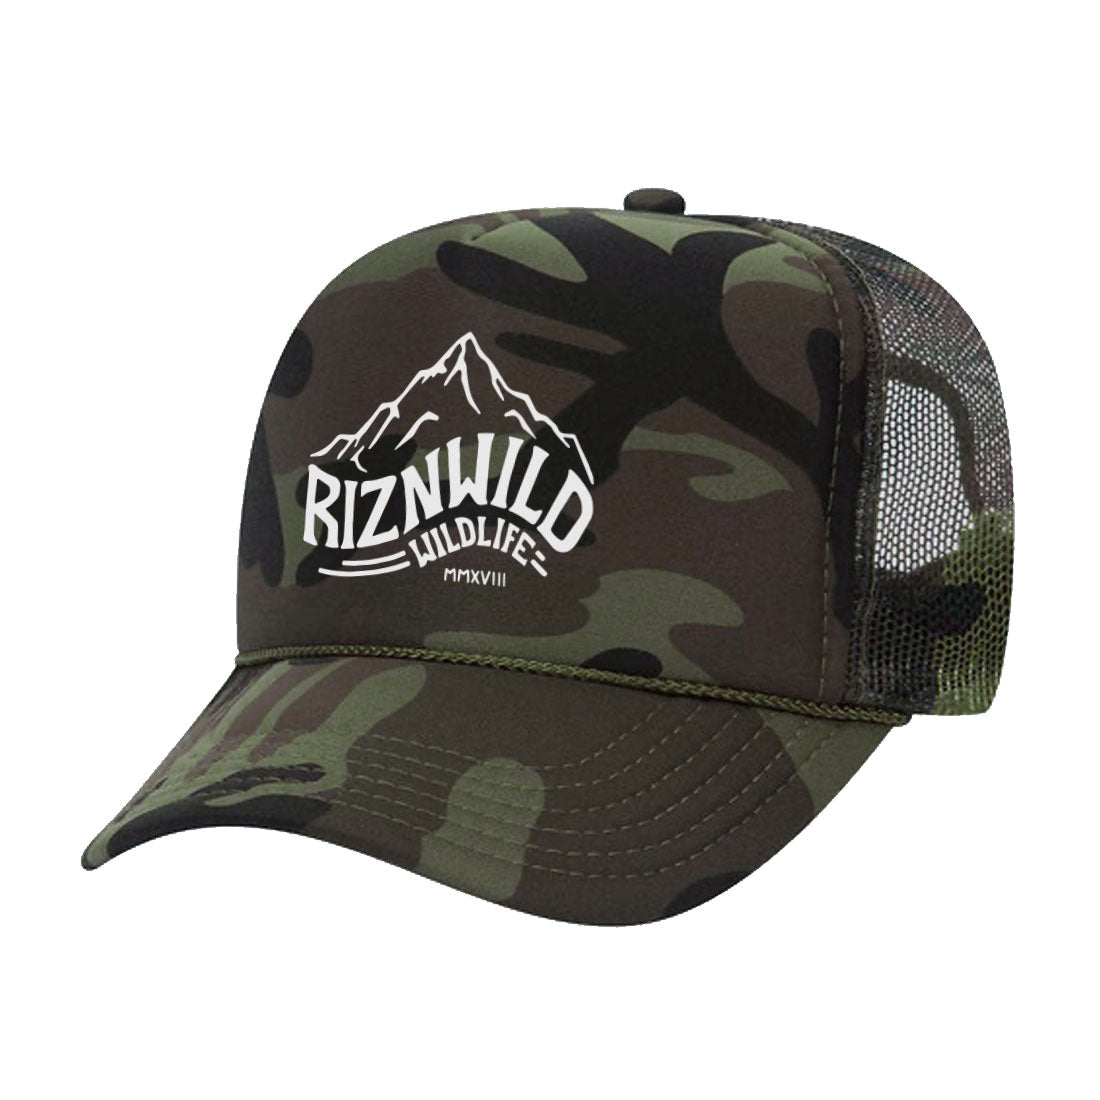 Green camo curved bill trucker hat, mesh back wilderness mountain design.